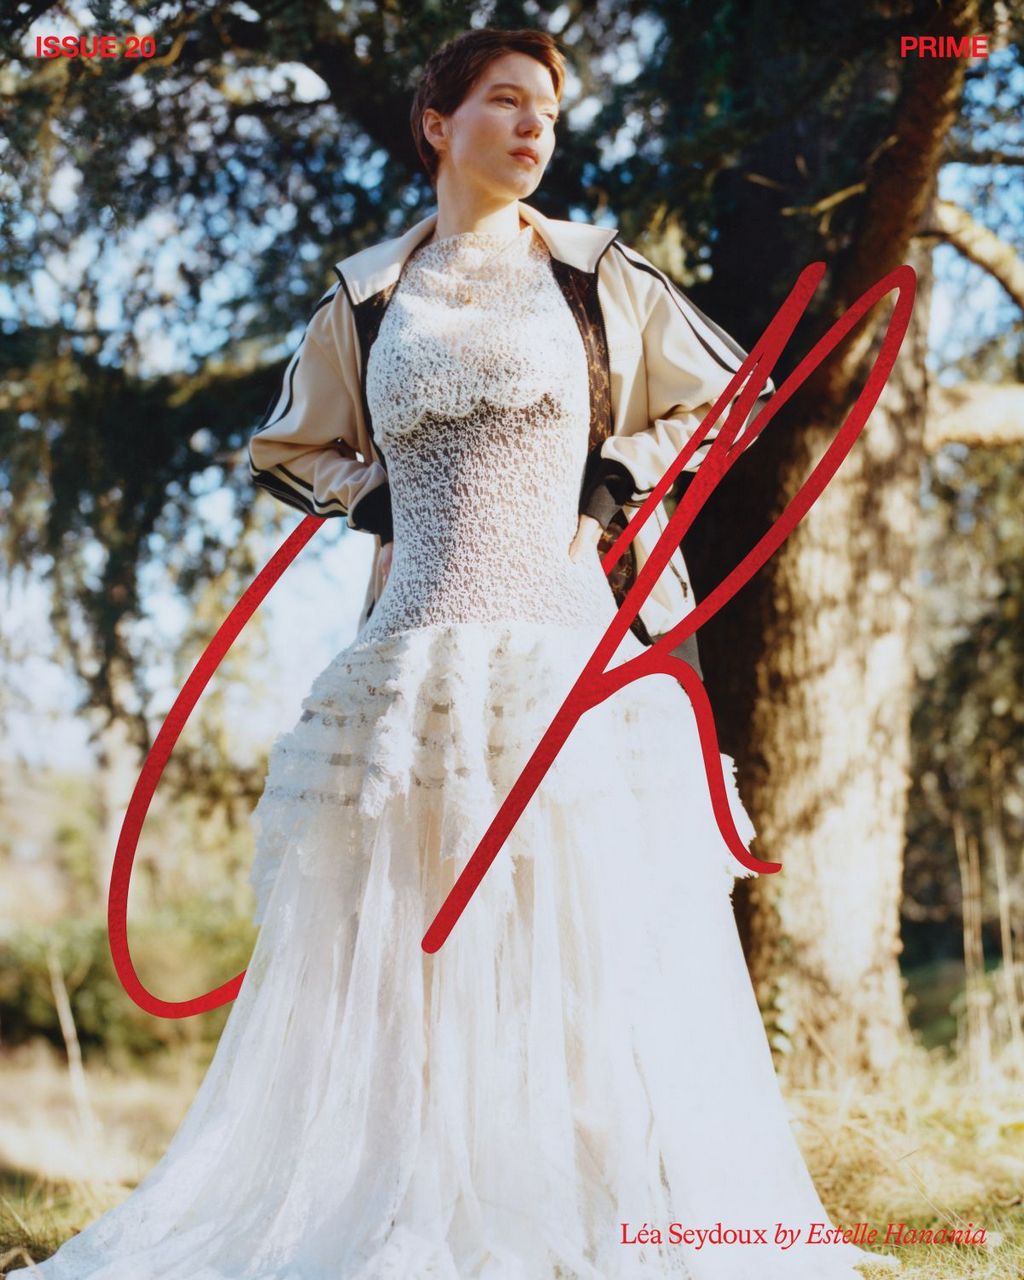 Lea Seydoux For Cr Fashion Book 20 Spring